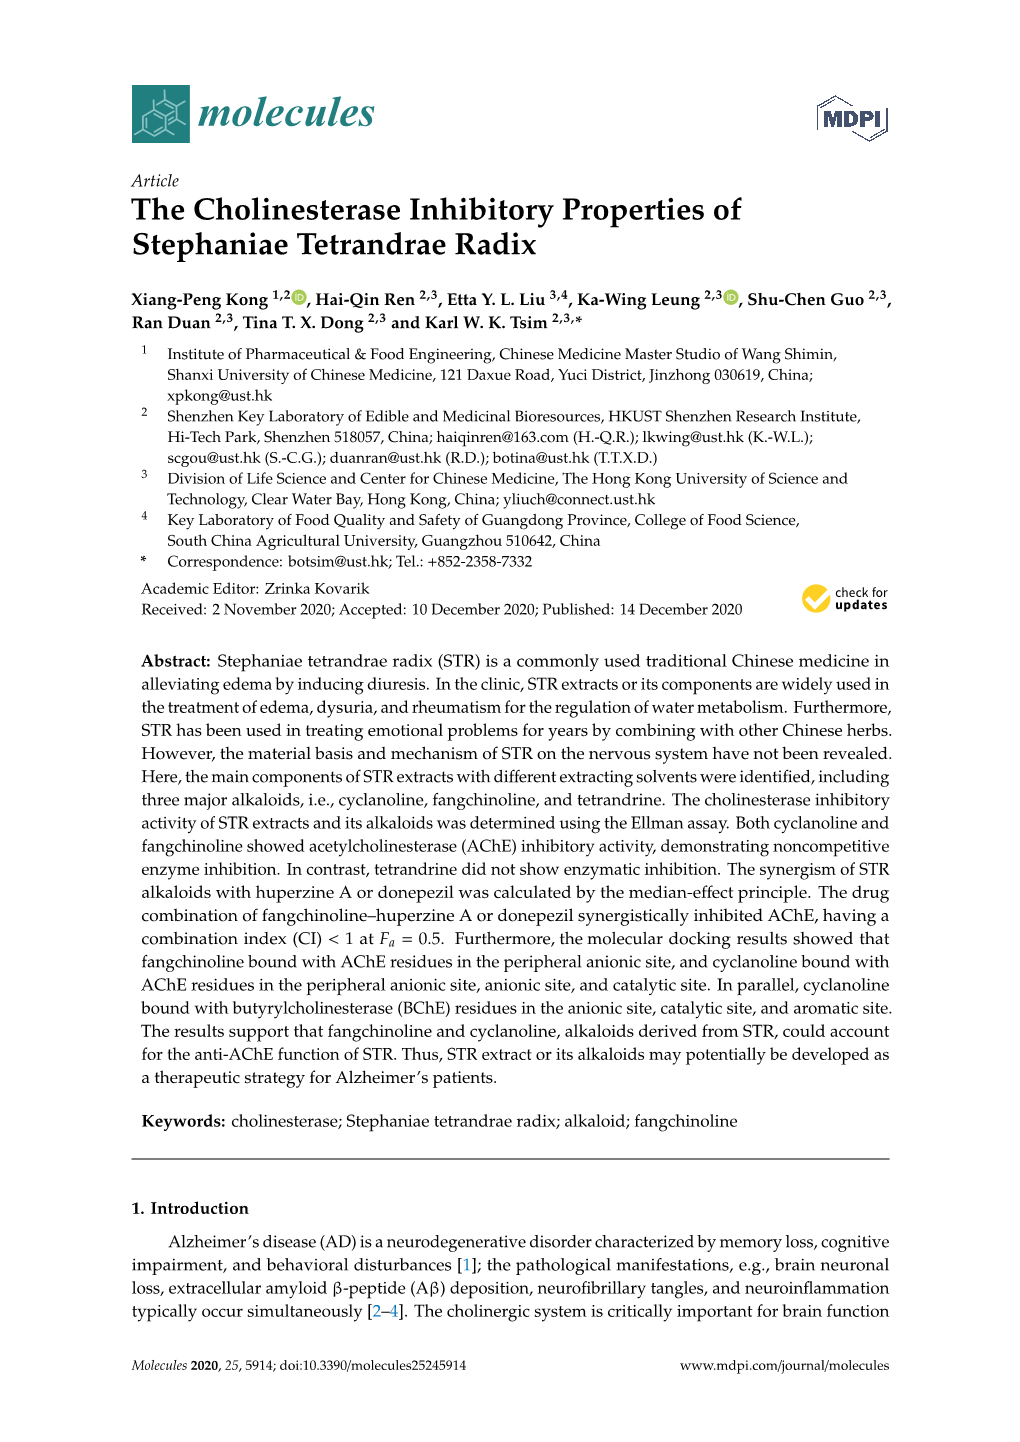 The Cholinesterase Inhibitory Properties of Stephaniae Tetrandrae Radix